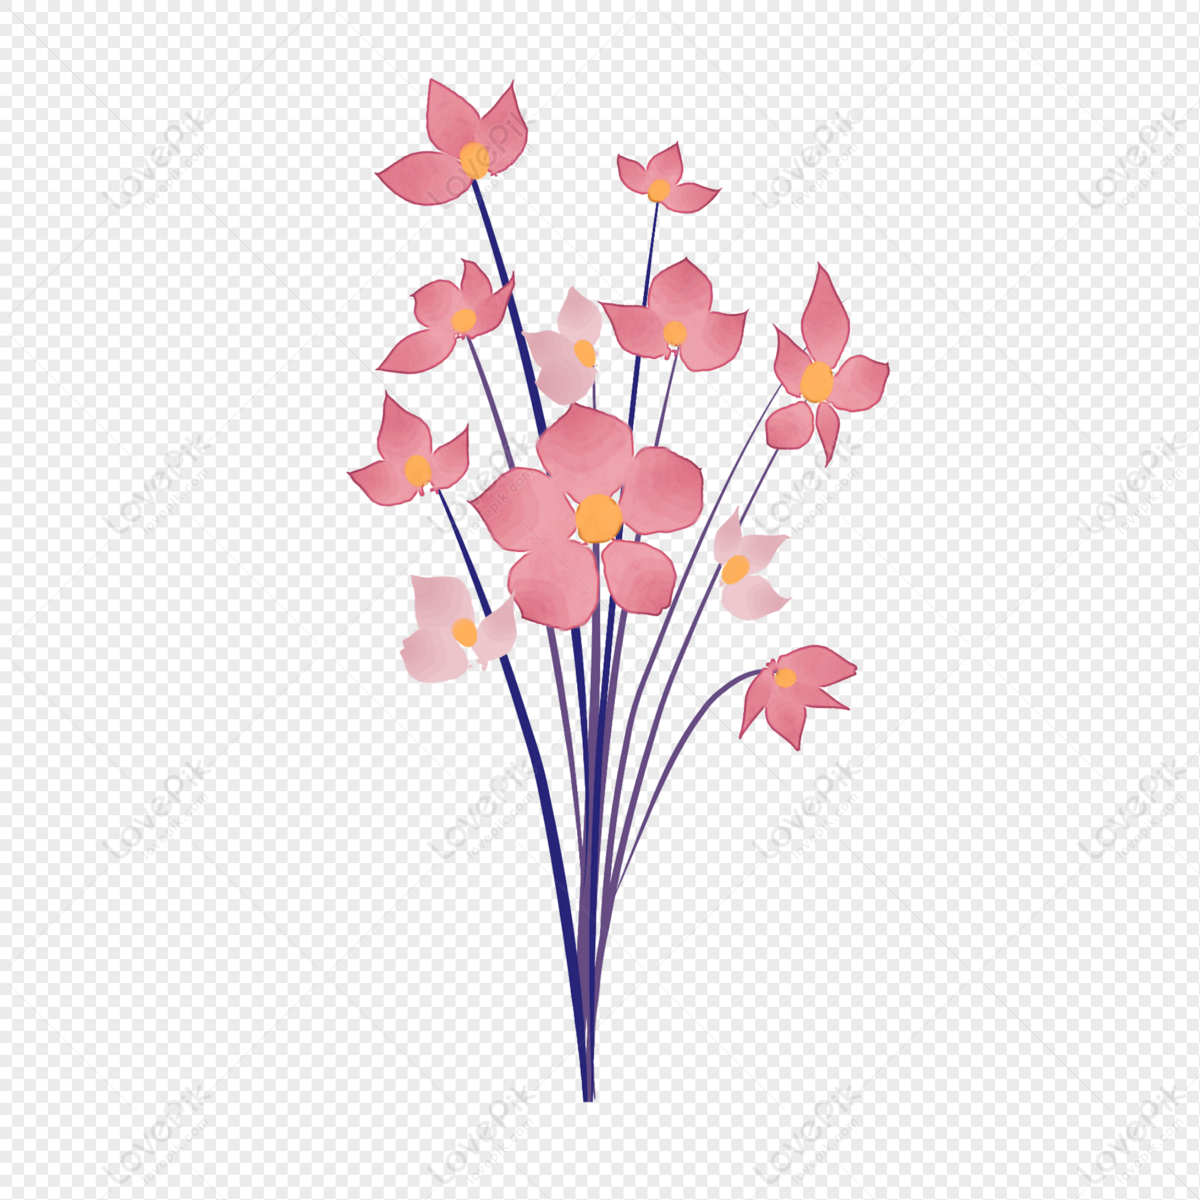 Pink Flower Cartoon png download - 564*705 - Free Transparent